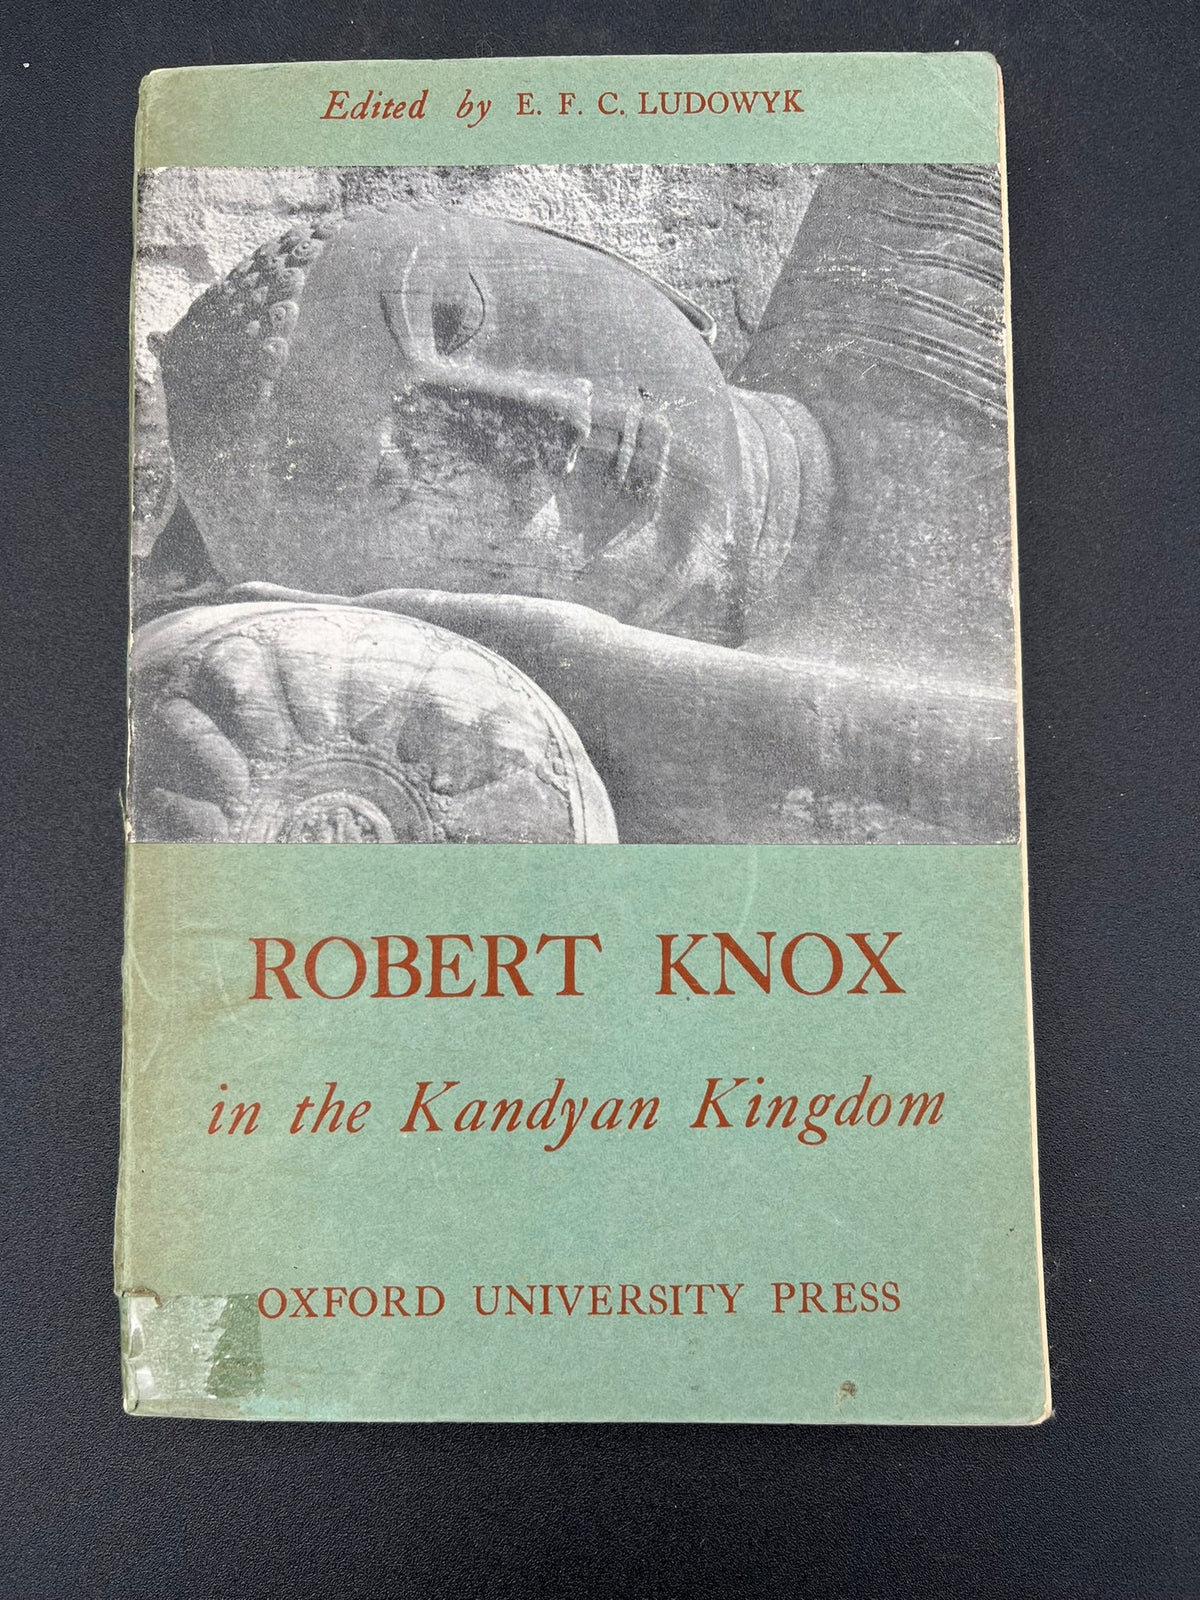 Robert Knox in the Kandyan Kingdom